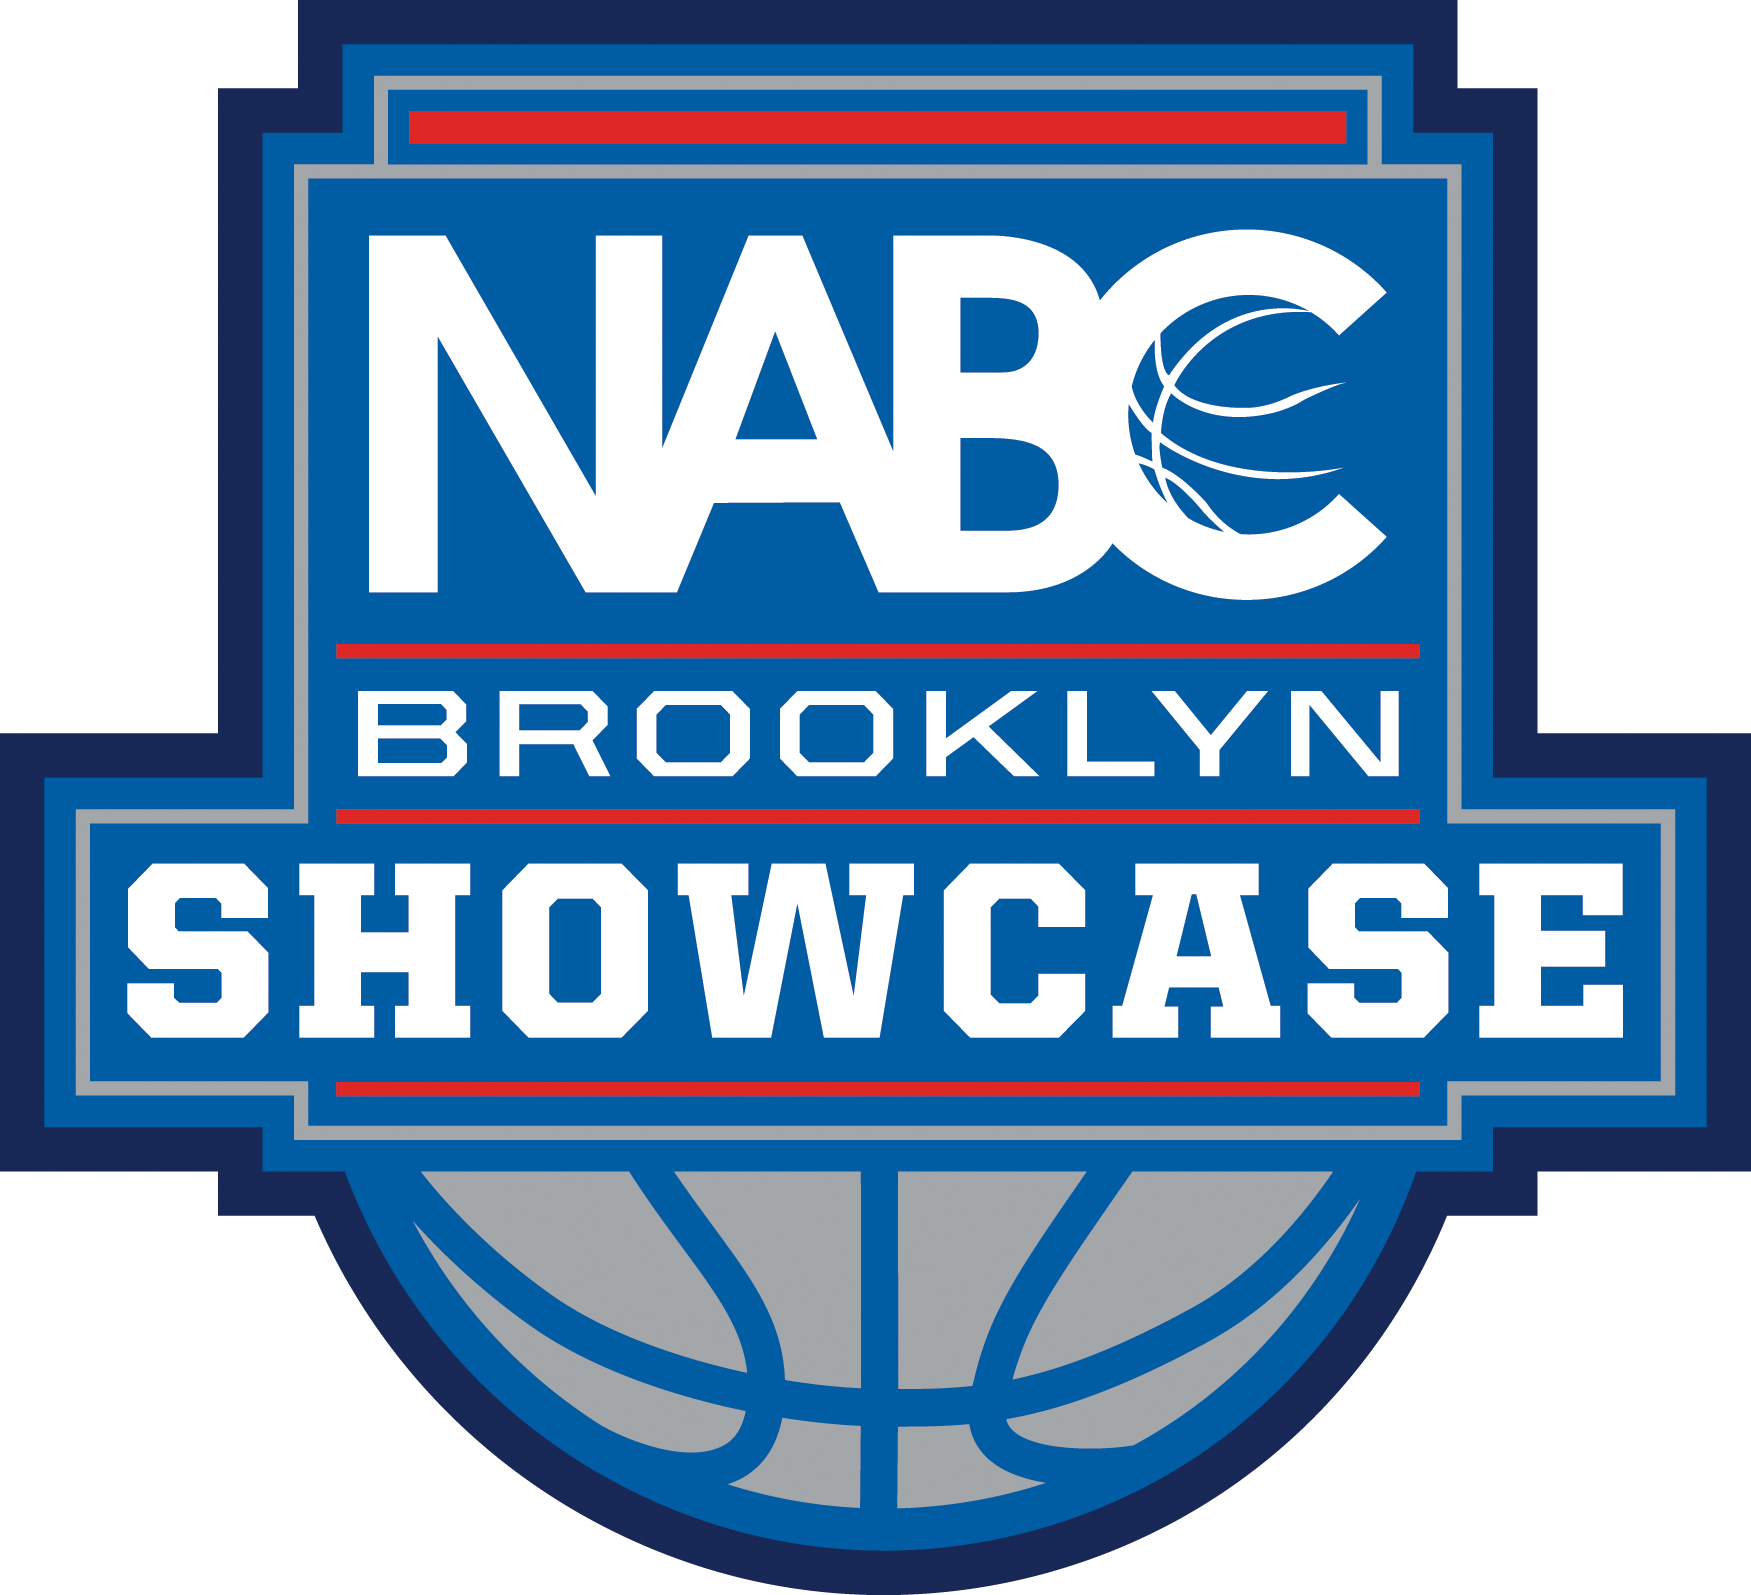 NABC Brooklyn Showcase National Association of Basketball Coaches